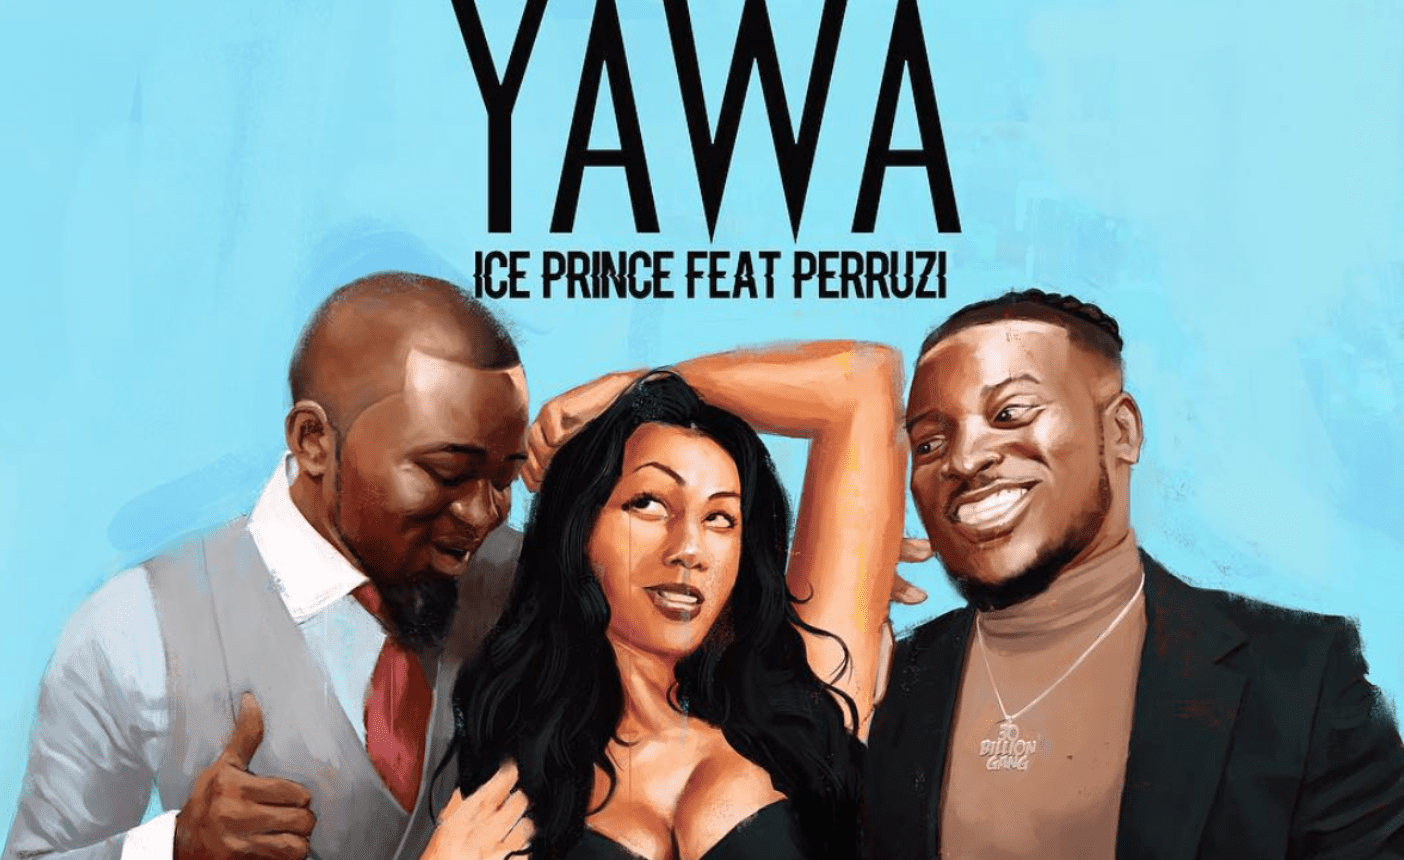 Listen to Ice Prince and Peruzzi on “Yawa”